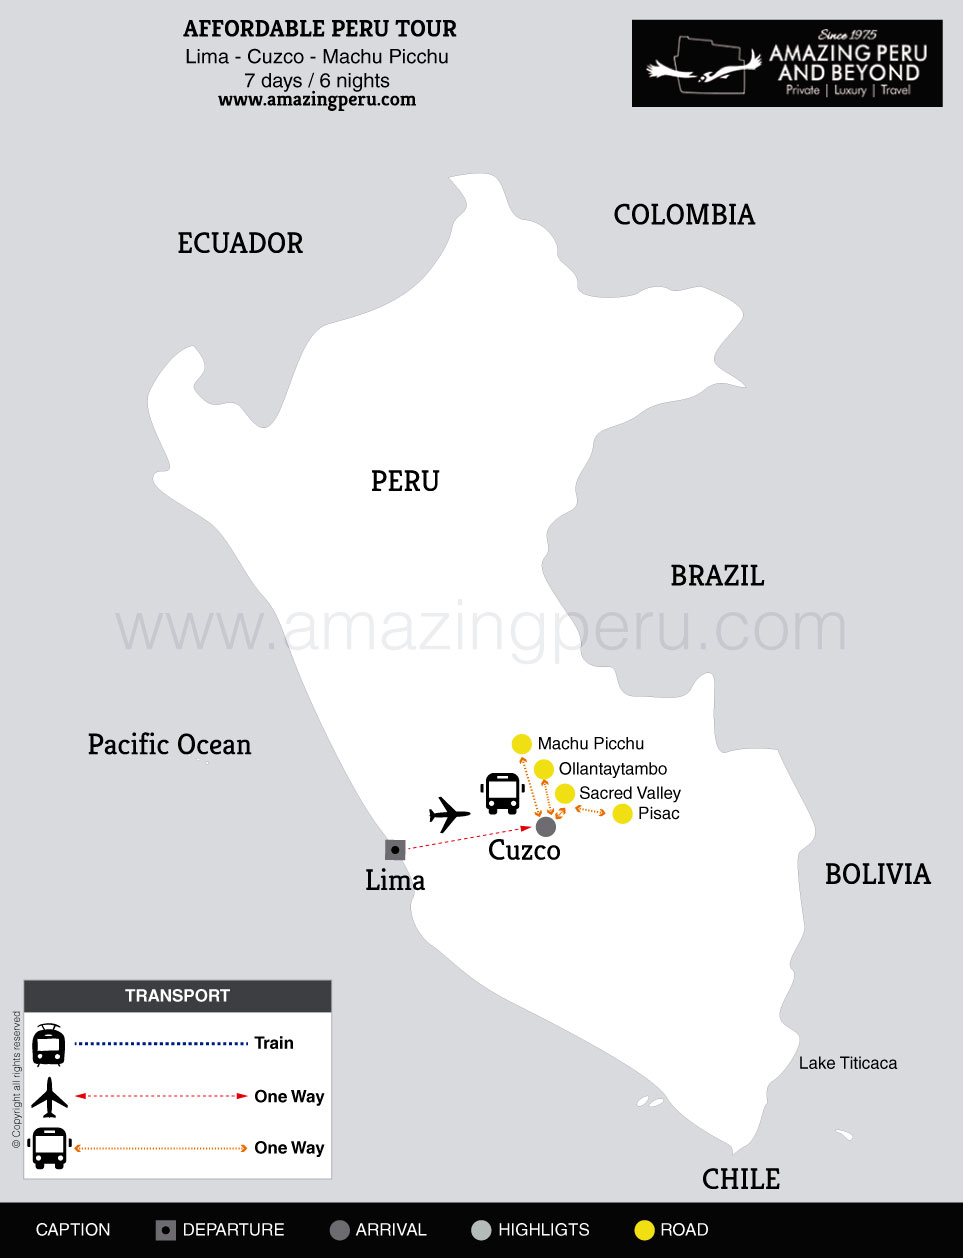 Affordable Peru Tour 2023 - 7 days / 6 nights.